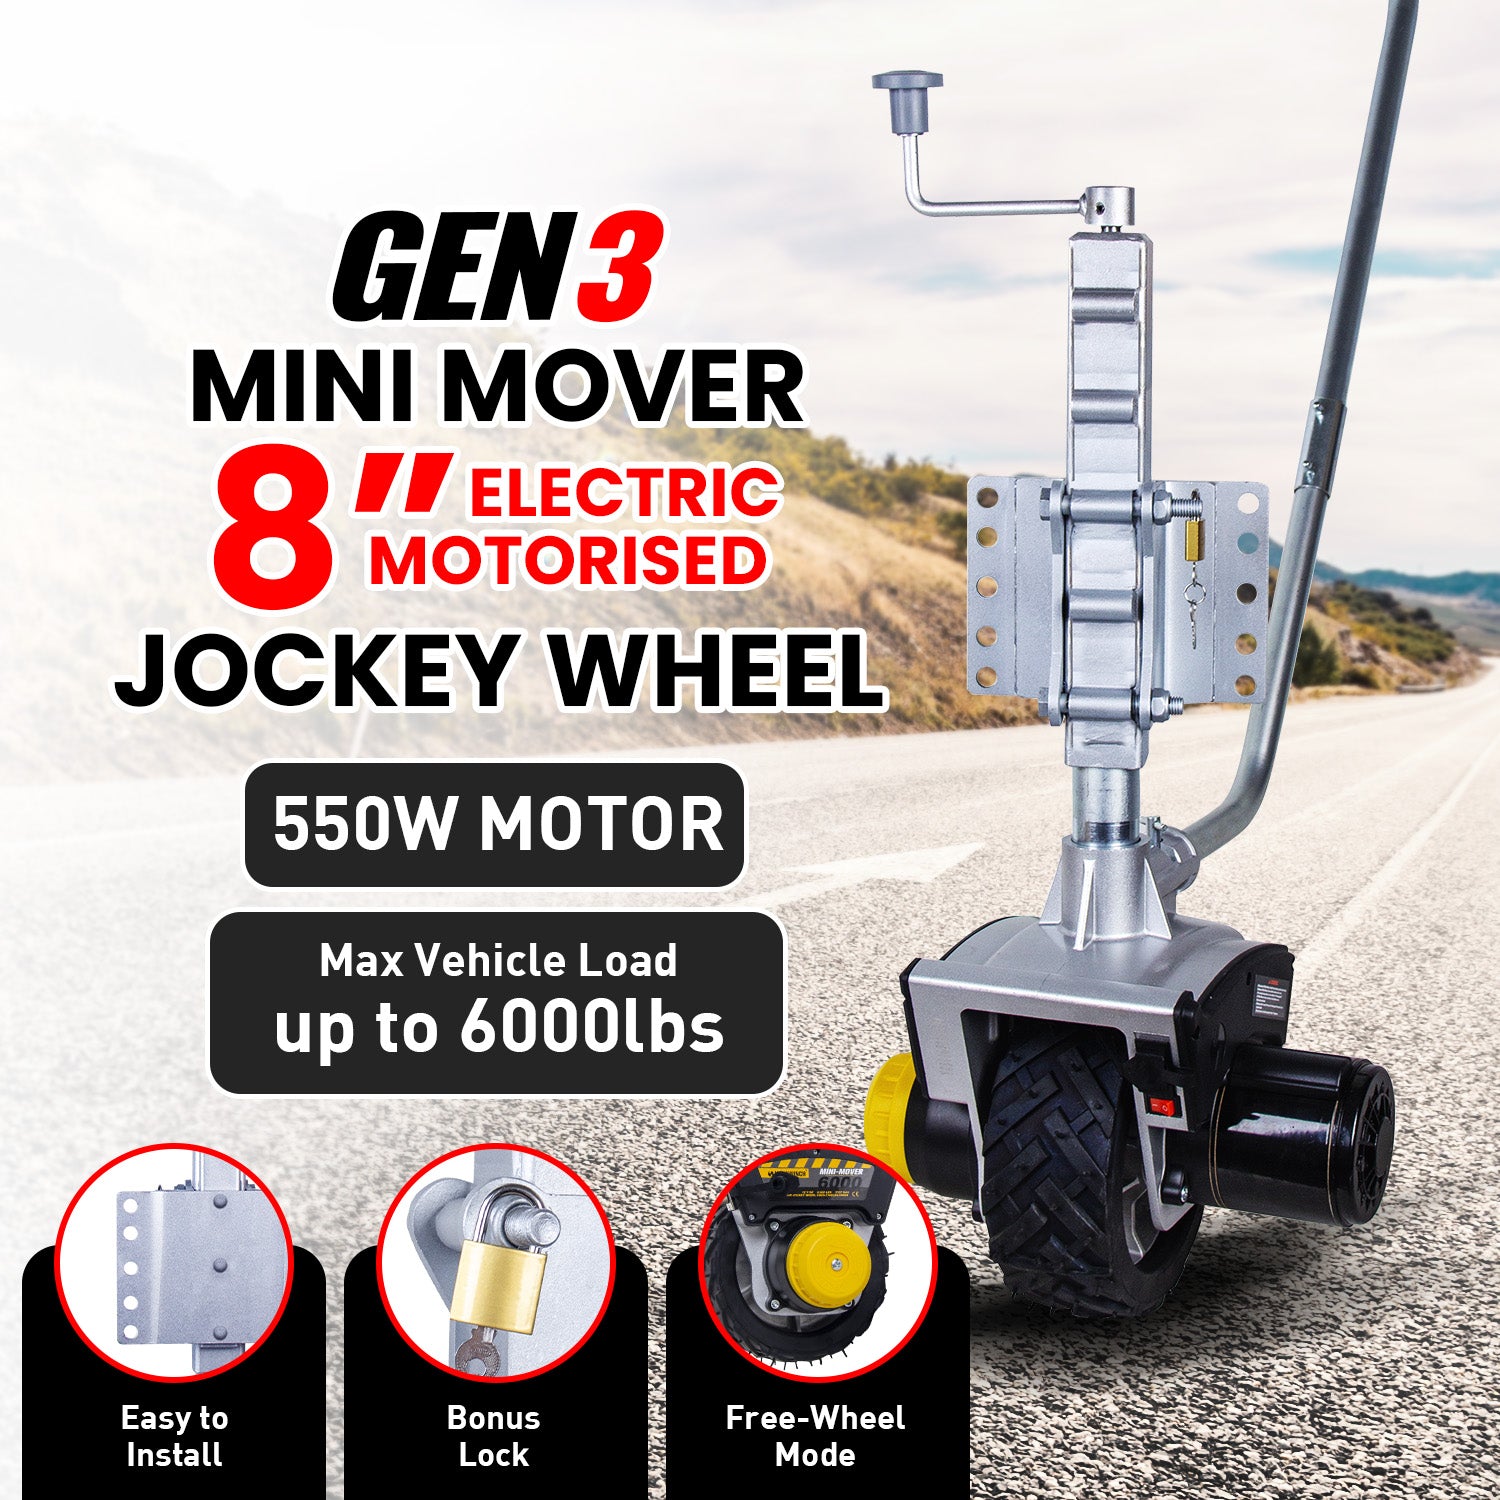 Mini Mover Gen3 Electric Motorised Jockey Wheel 12v 550w